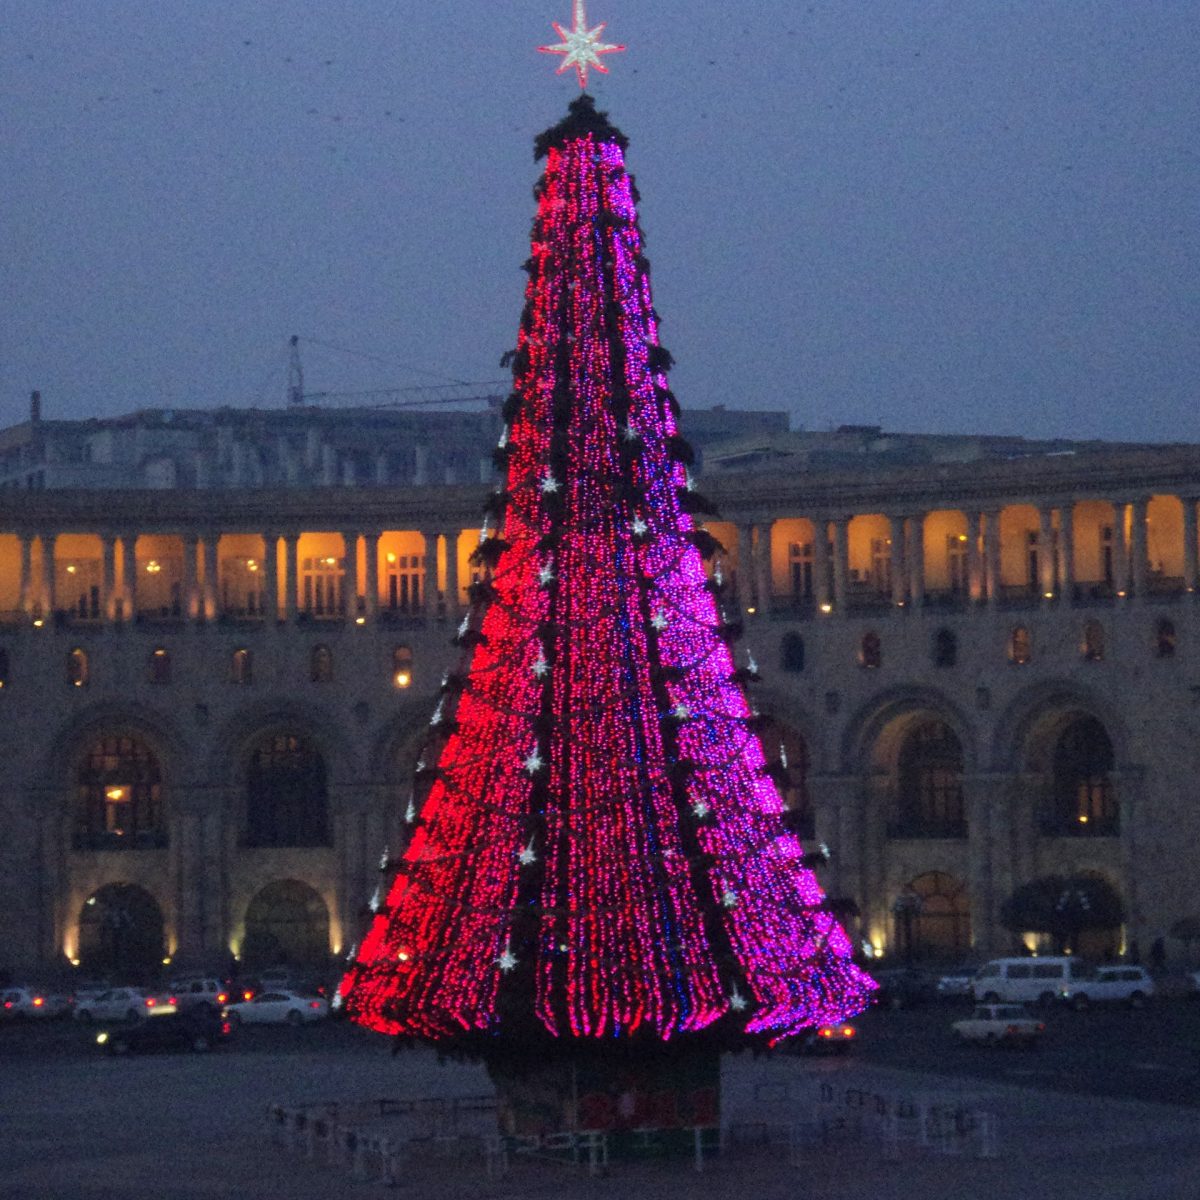 Republic Square Christmas Tree